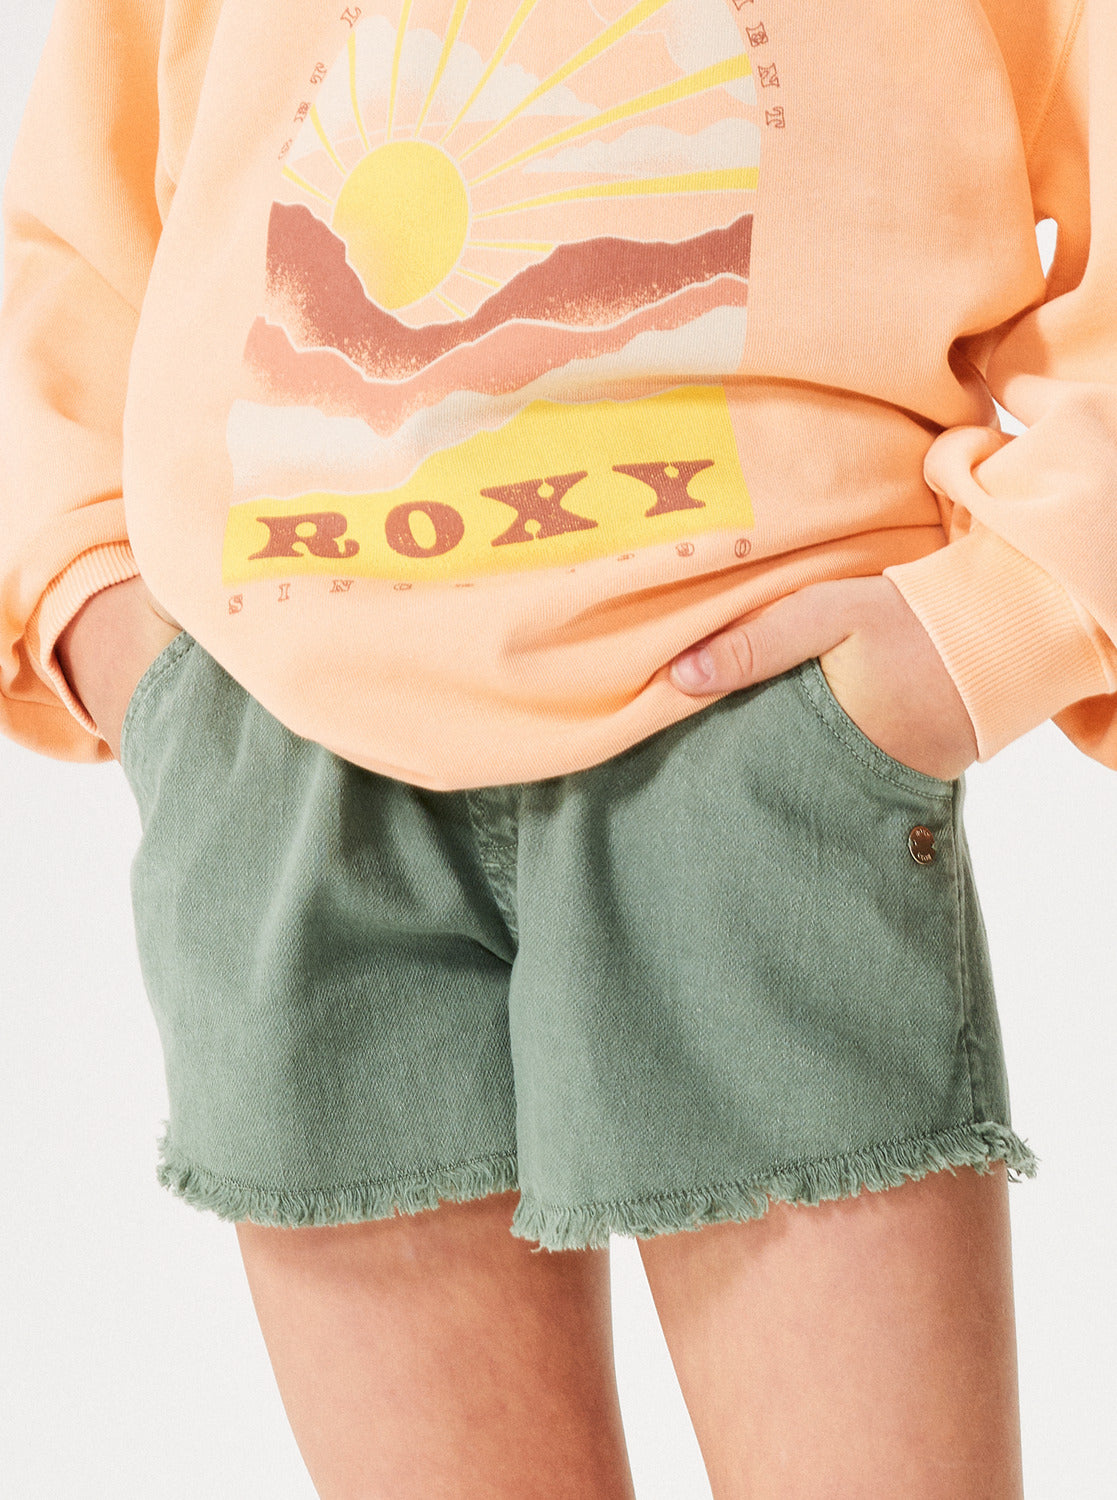 Item 803196 - Roxy Backyard - Girls' Pants and Shorts - Size S